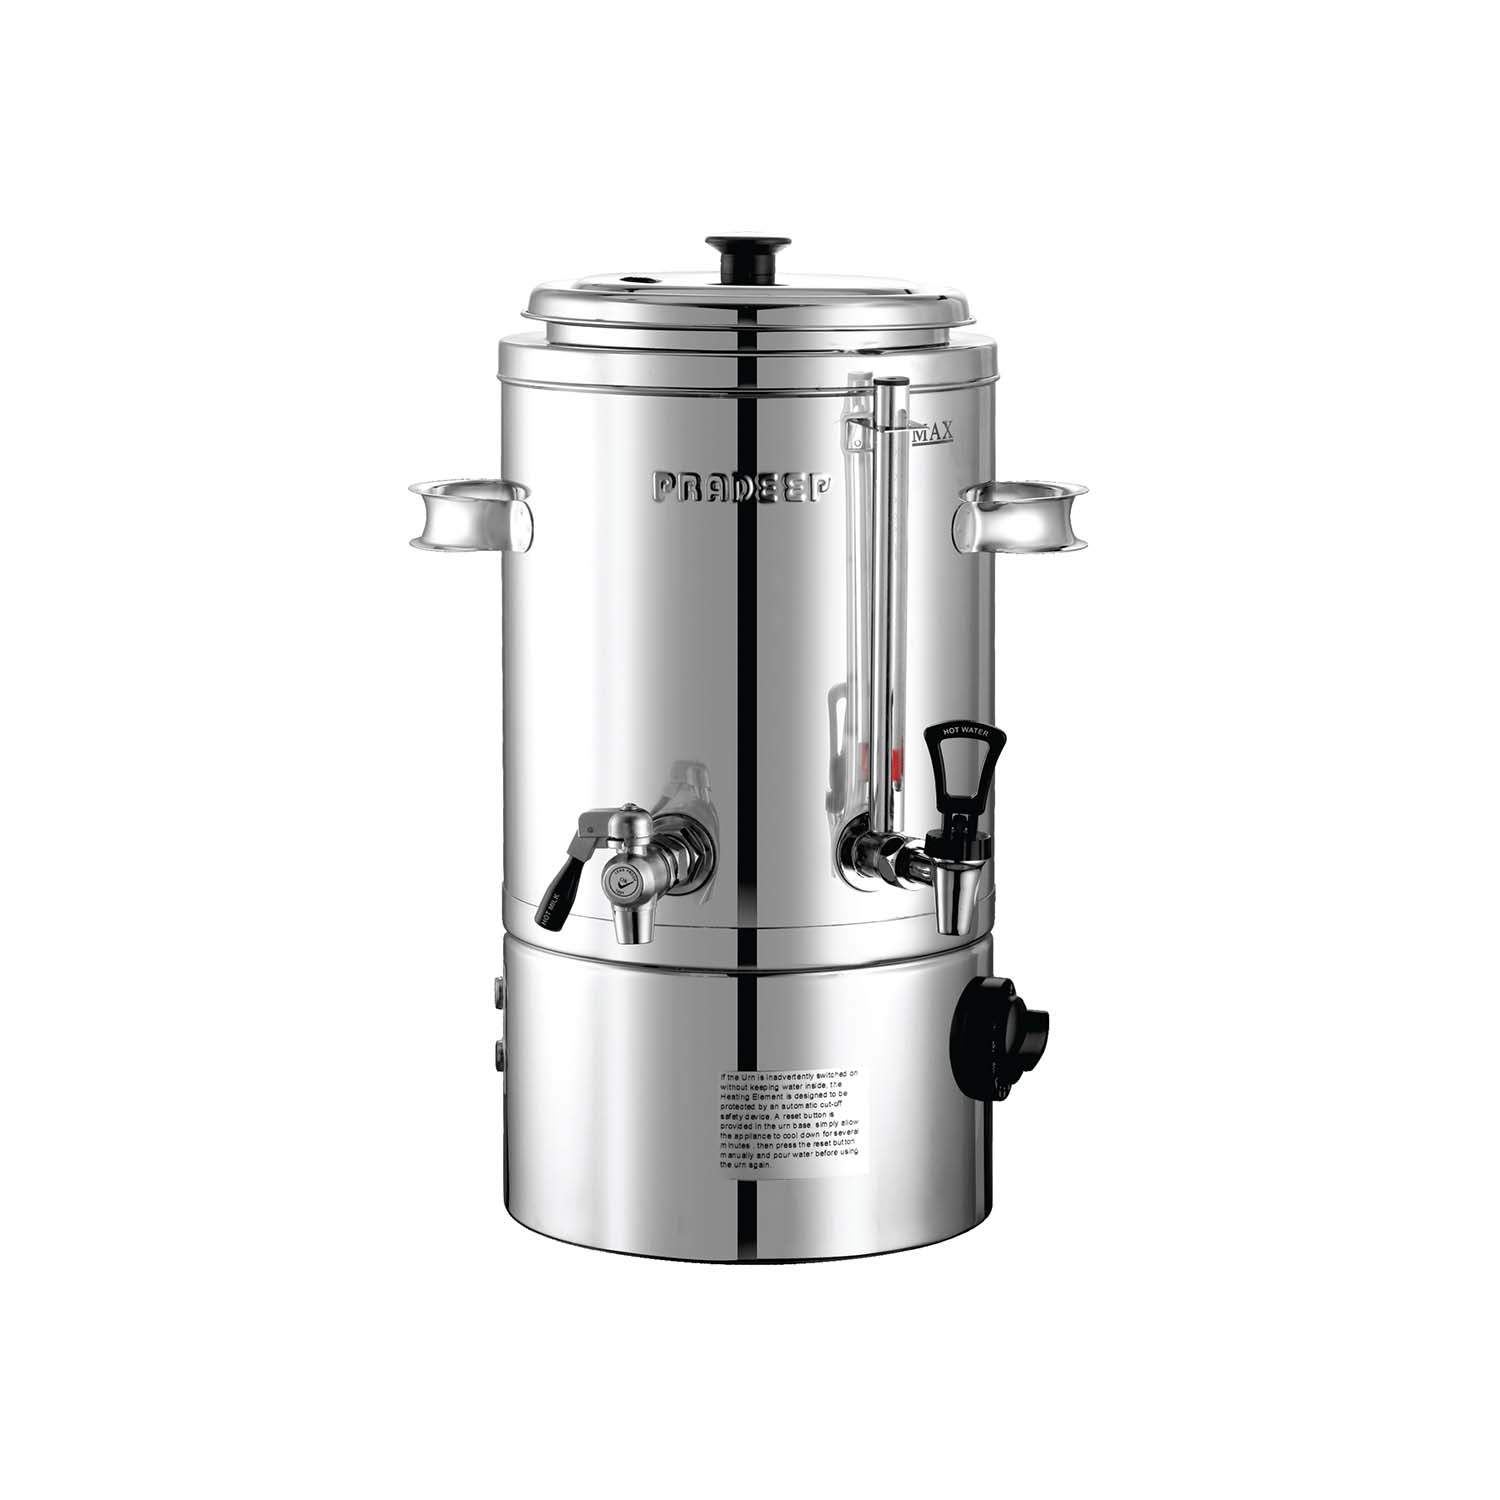 Pradeep Milk Boiler 20 L - Stainless Steel - Silver - 20 L